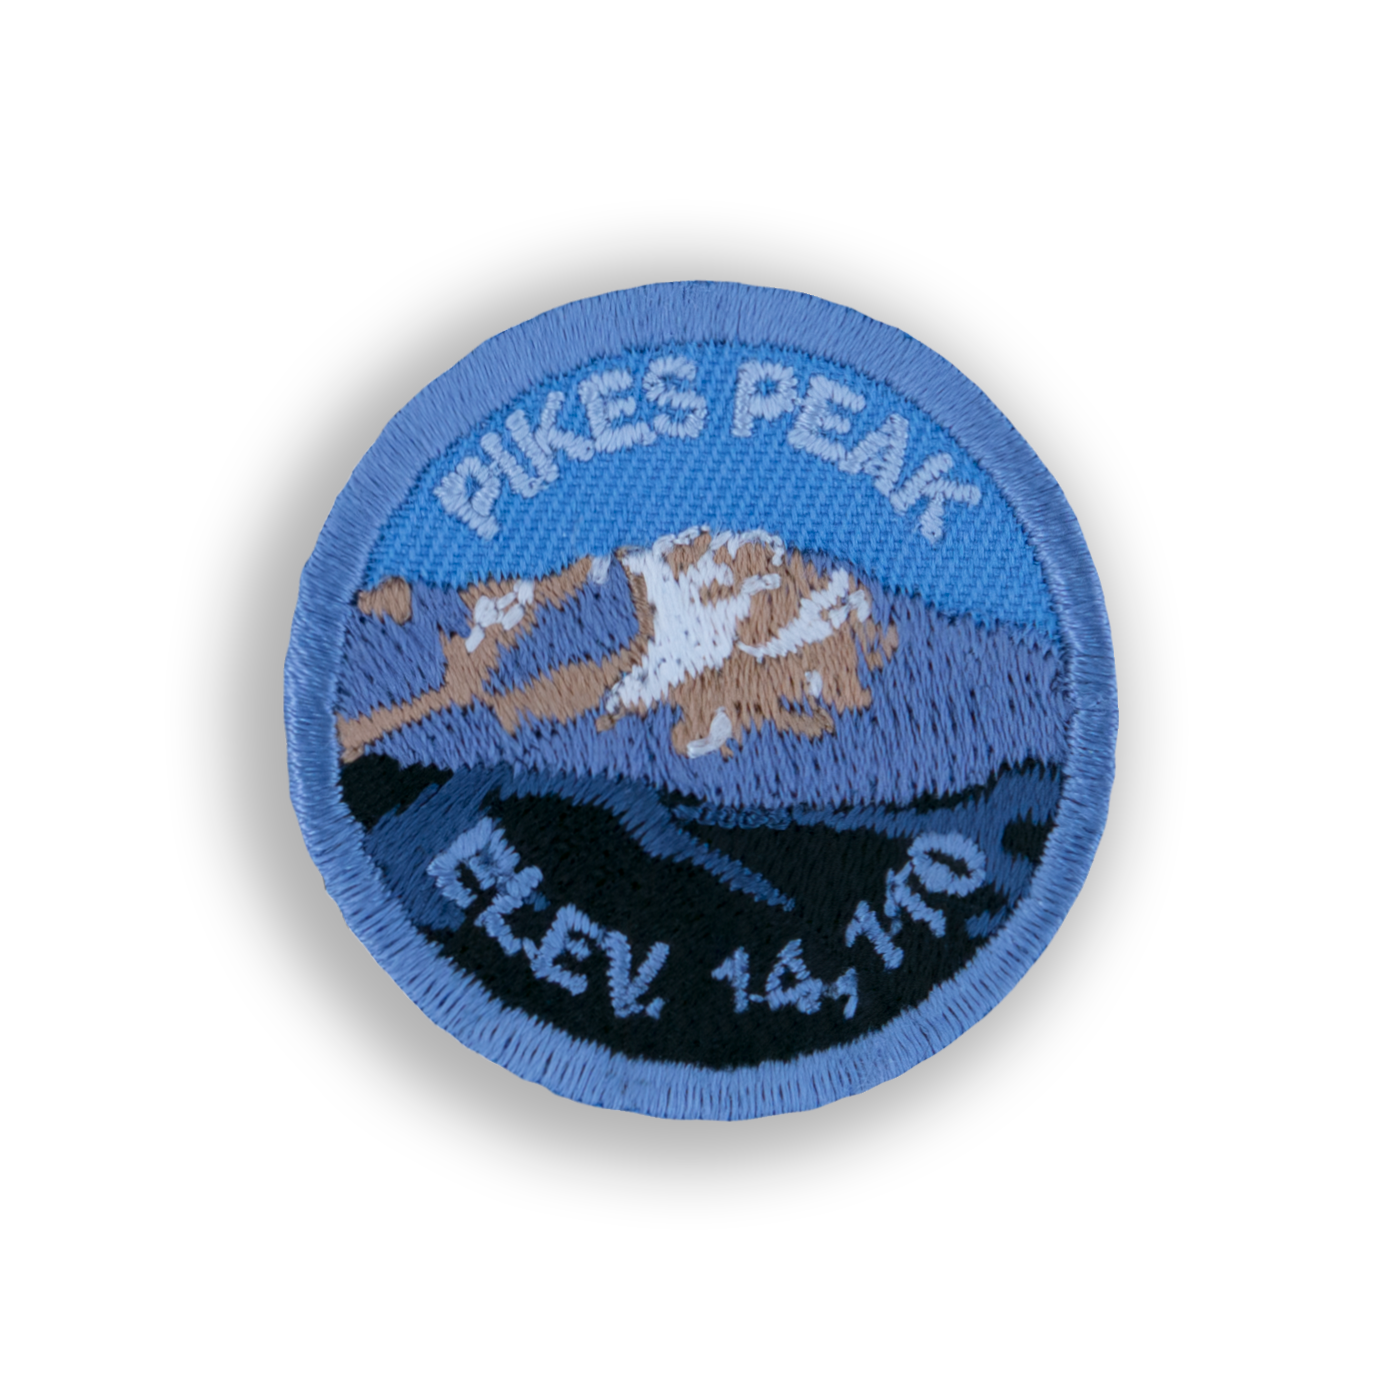 Pikes Peak Patch | Demerit Wear - Fake Merit Badges